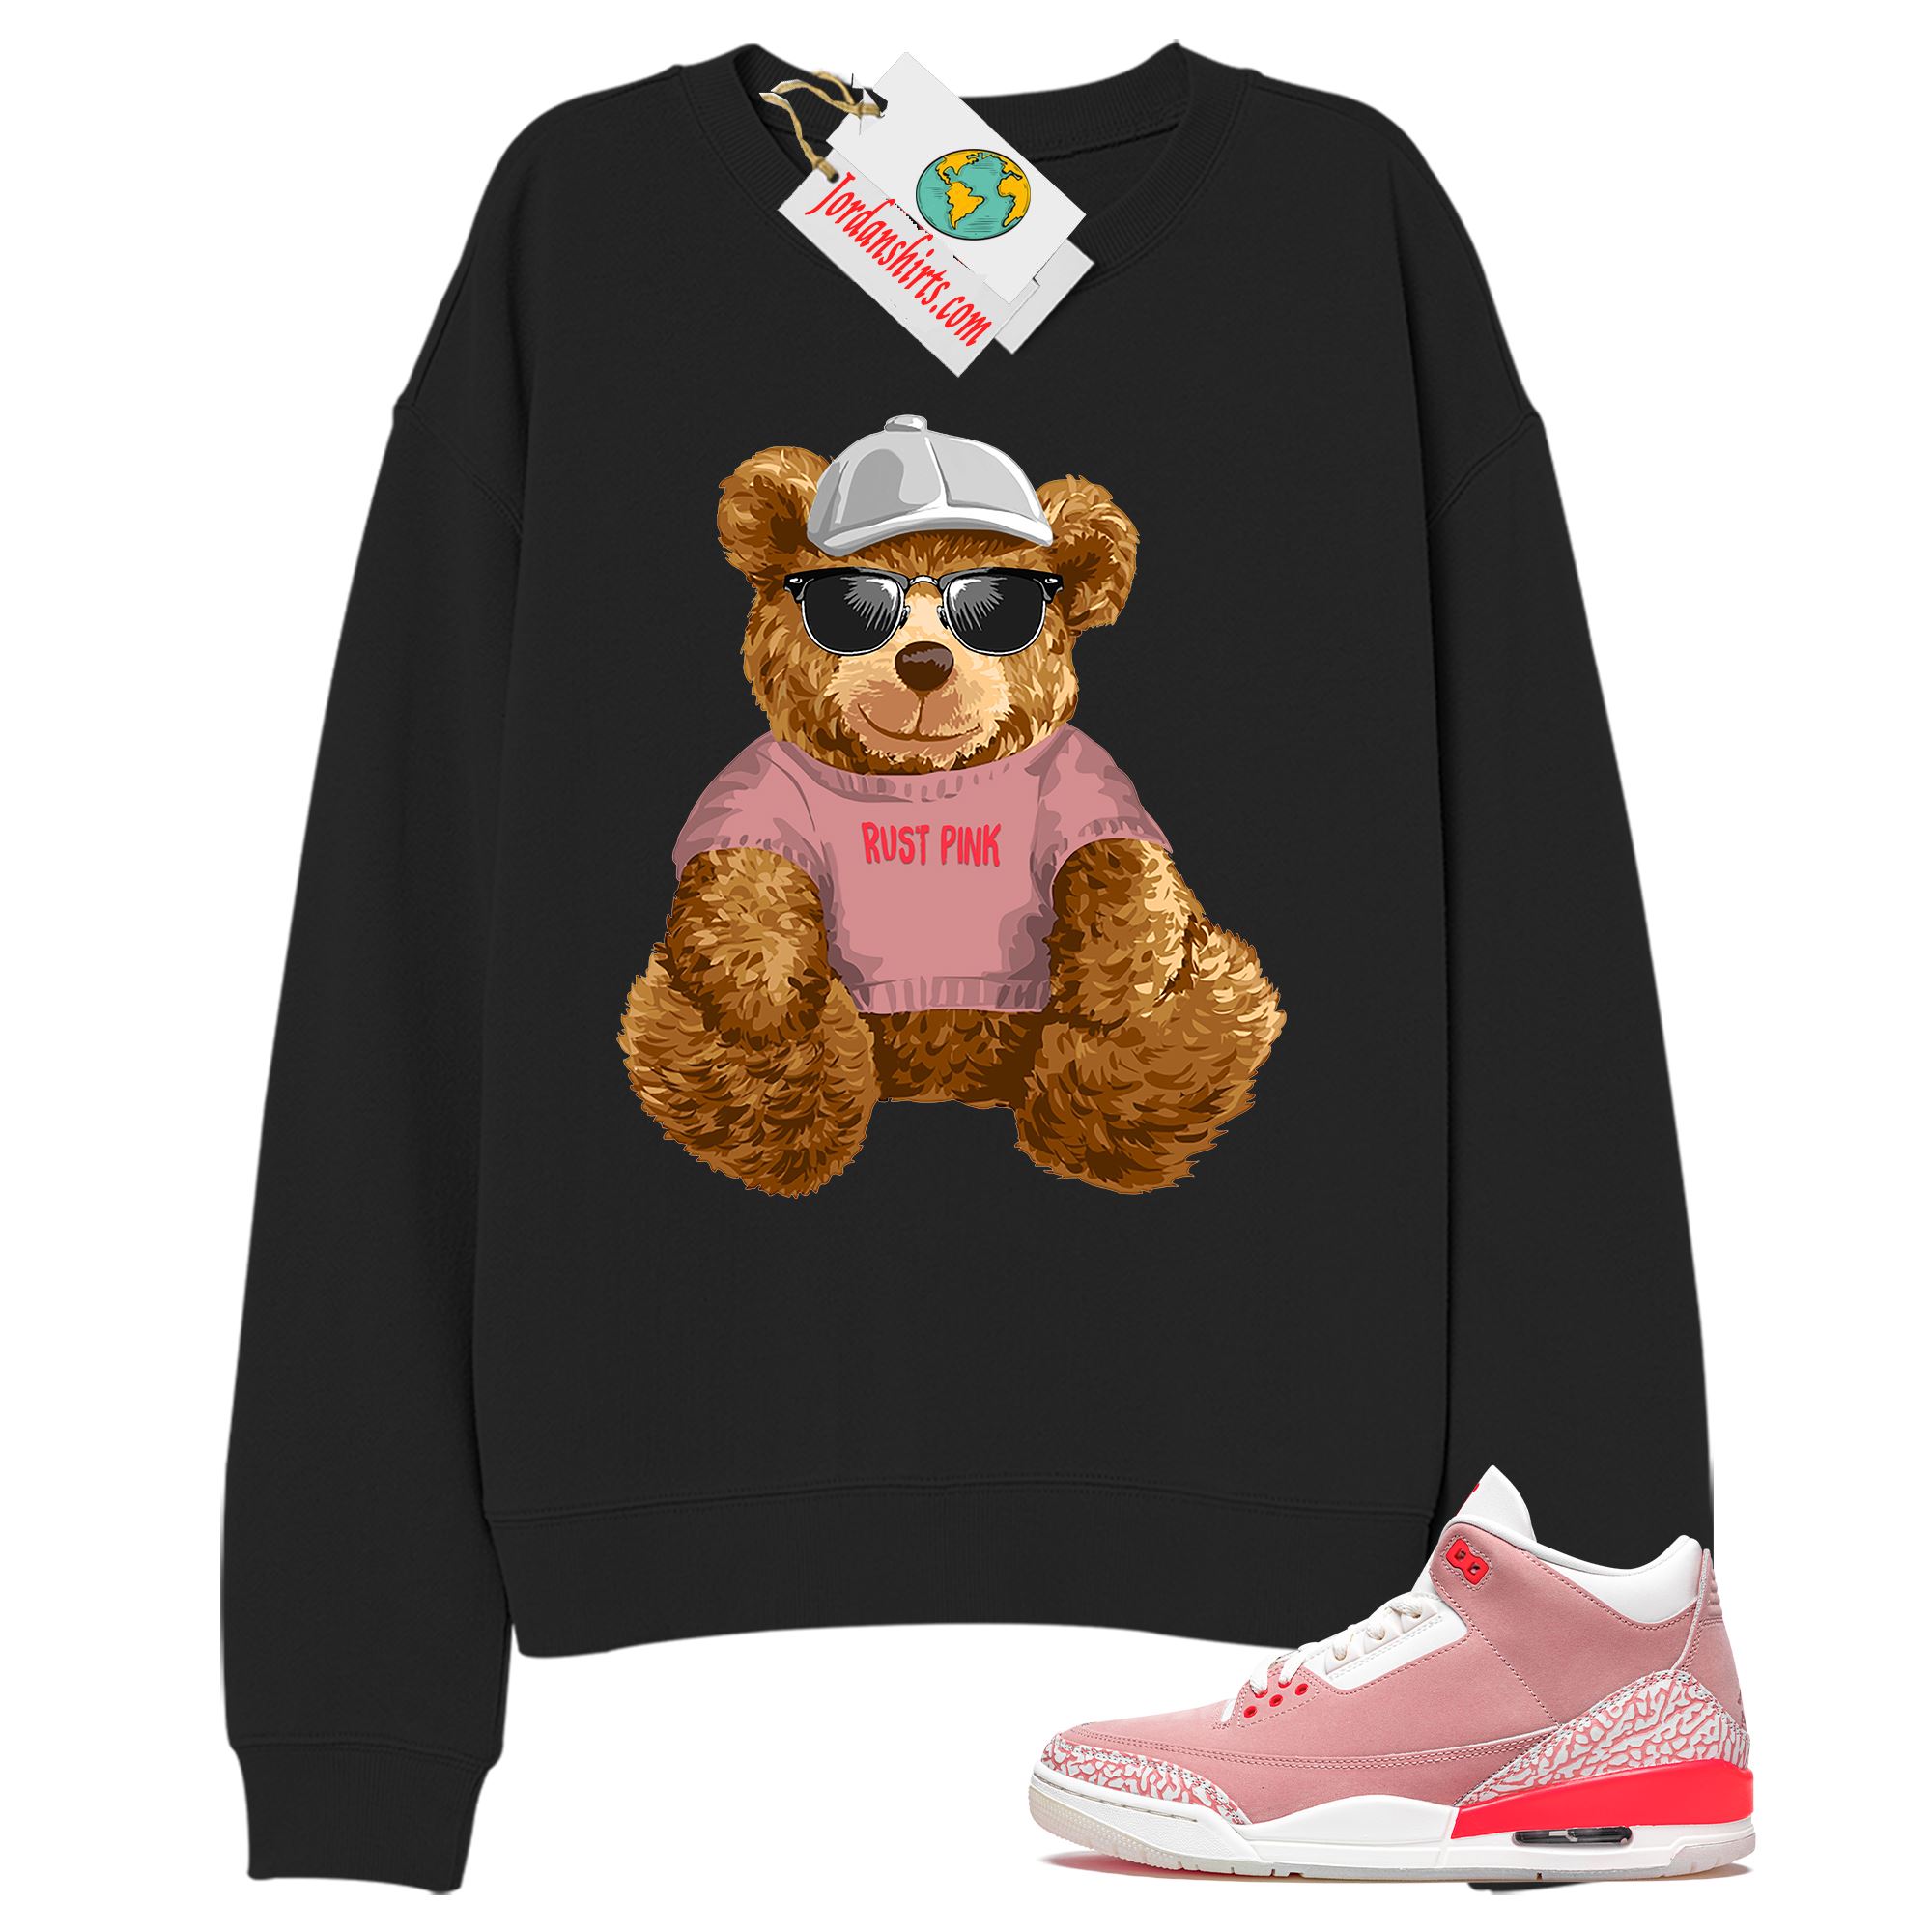 Jordan 3 Sweatshirt, Teddy Bear With Sunglasses Hat Black Sweatshirt Air Jordan 3 Rust Pink 3s Size Up To 5xl